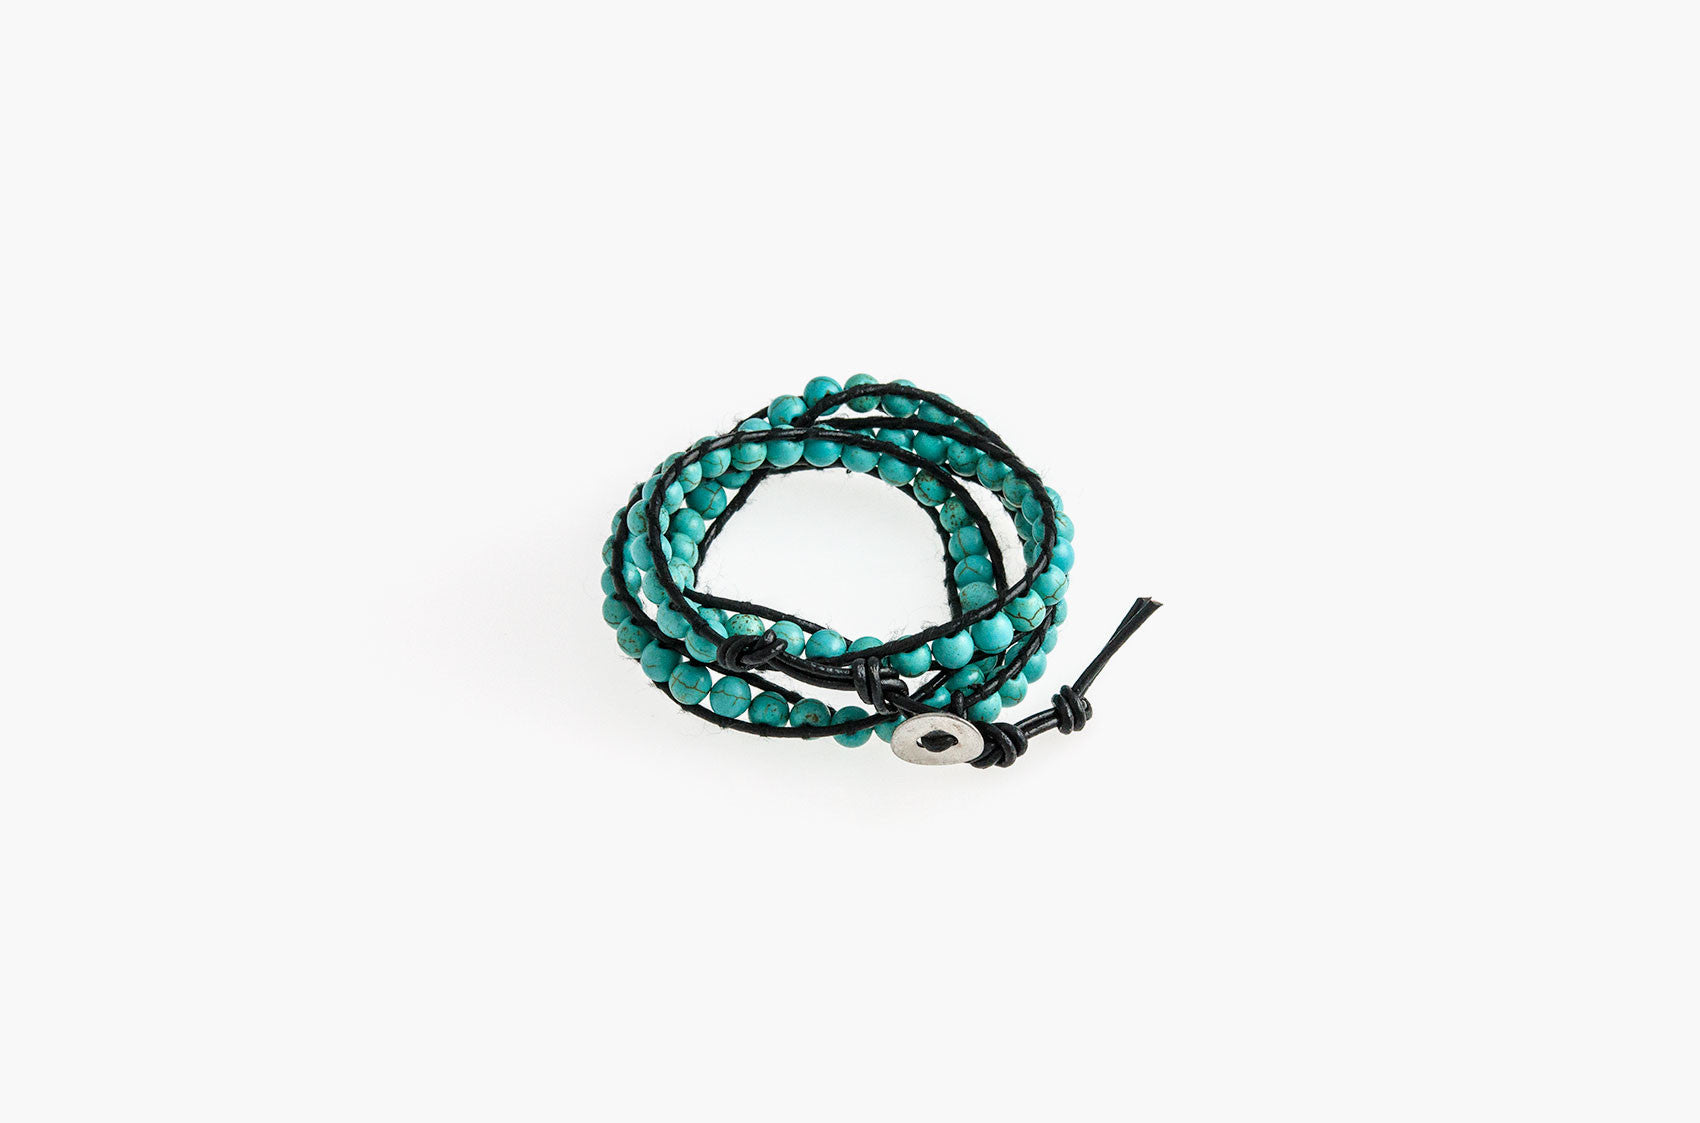 Turquoise wrap bracelet with black leather